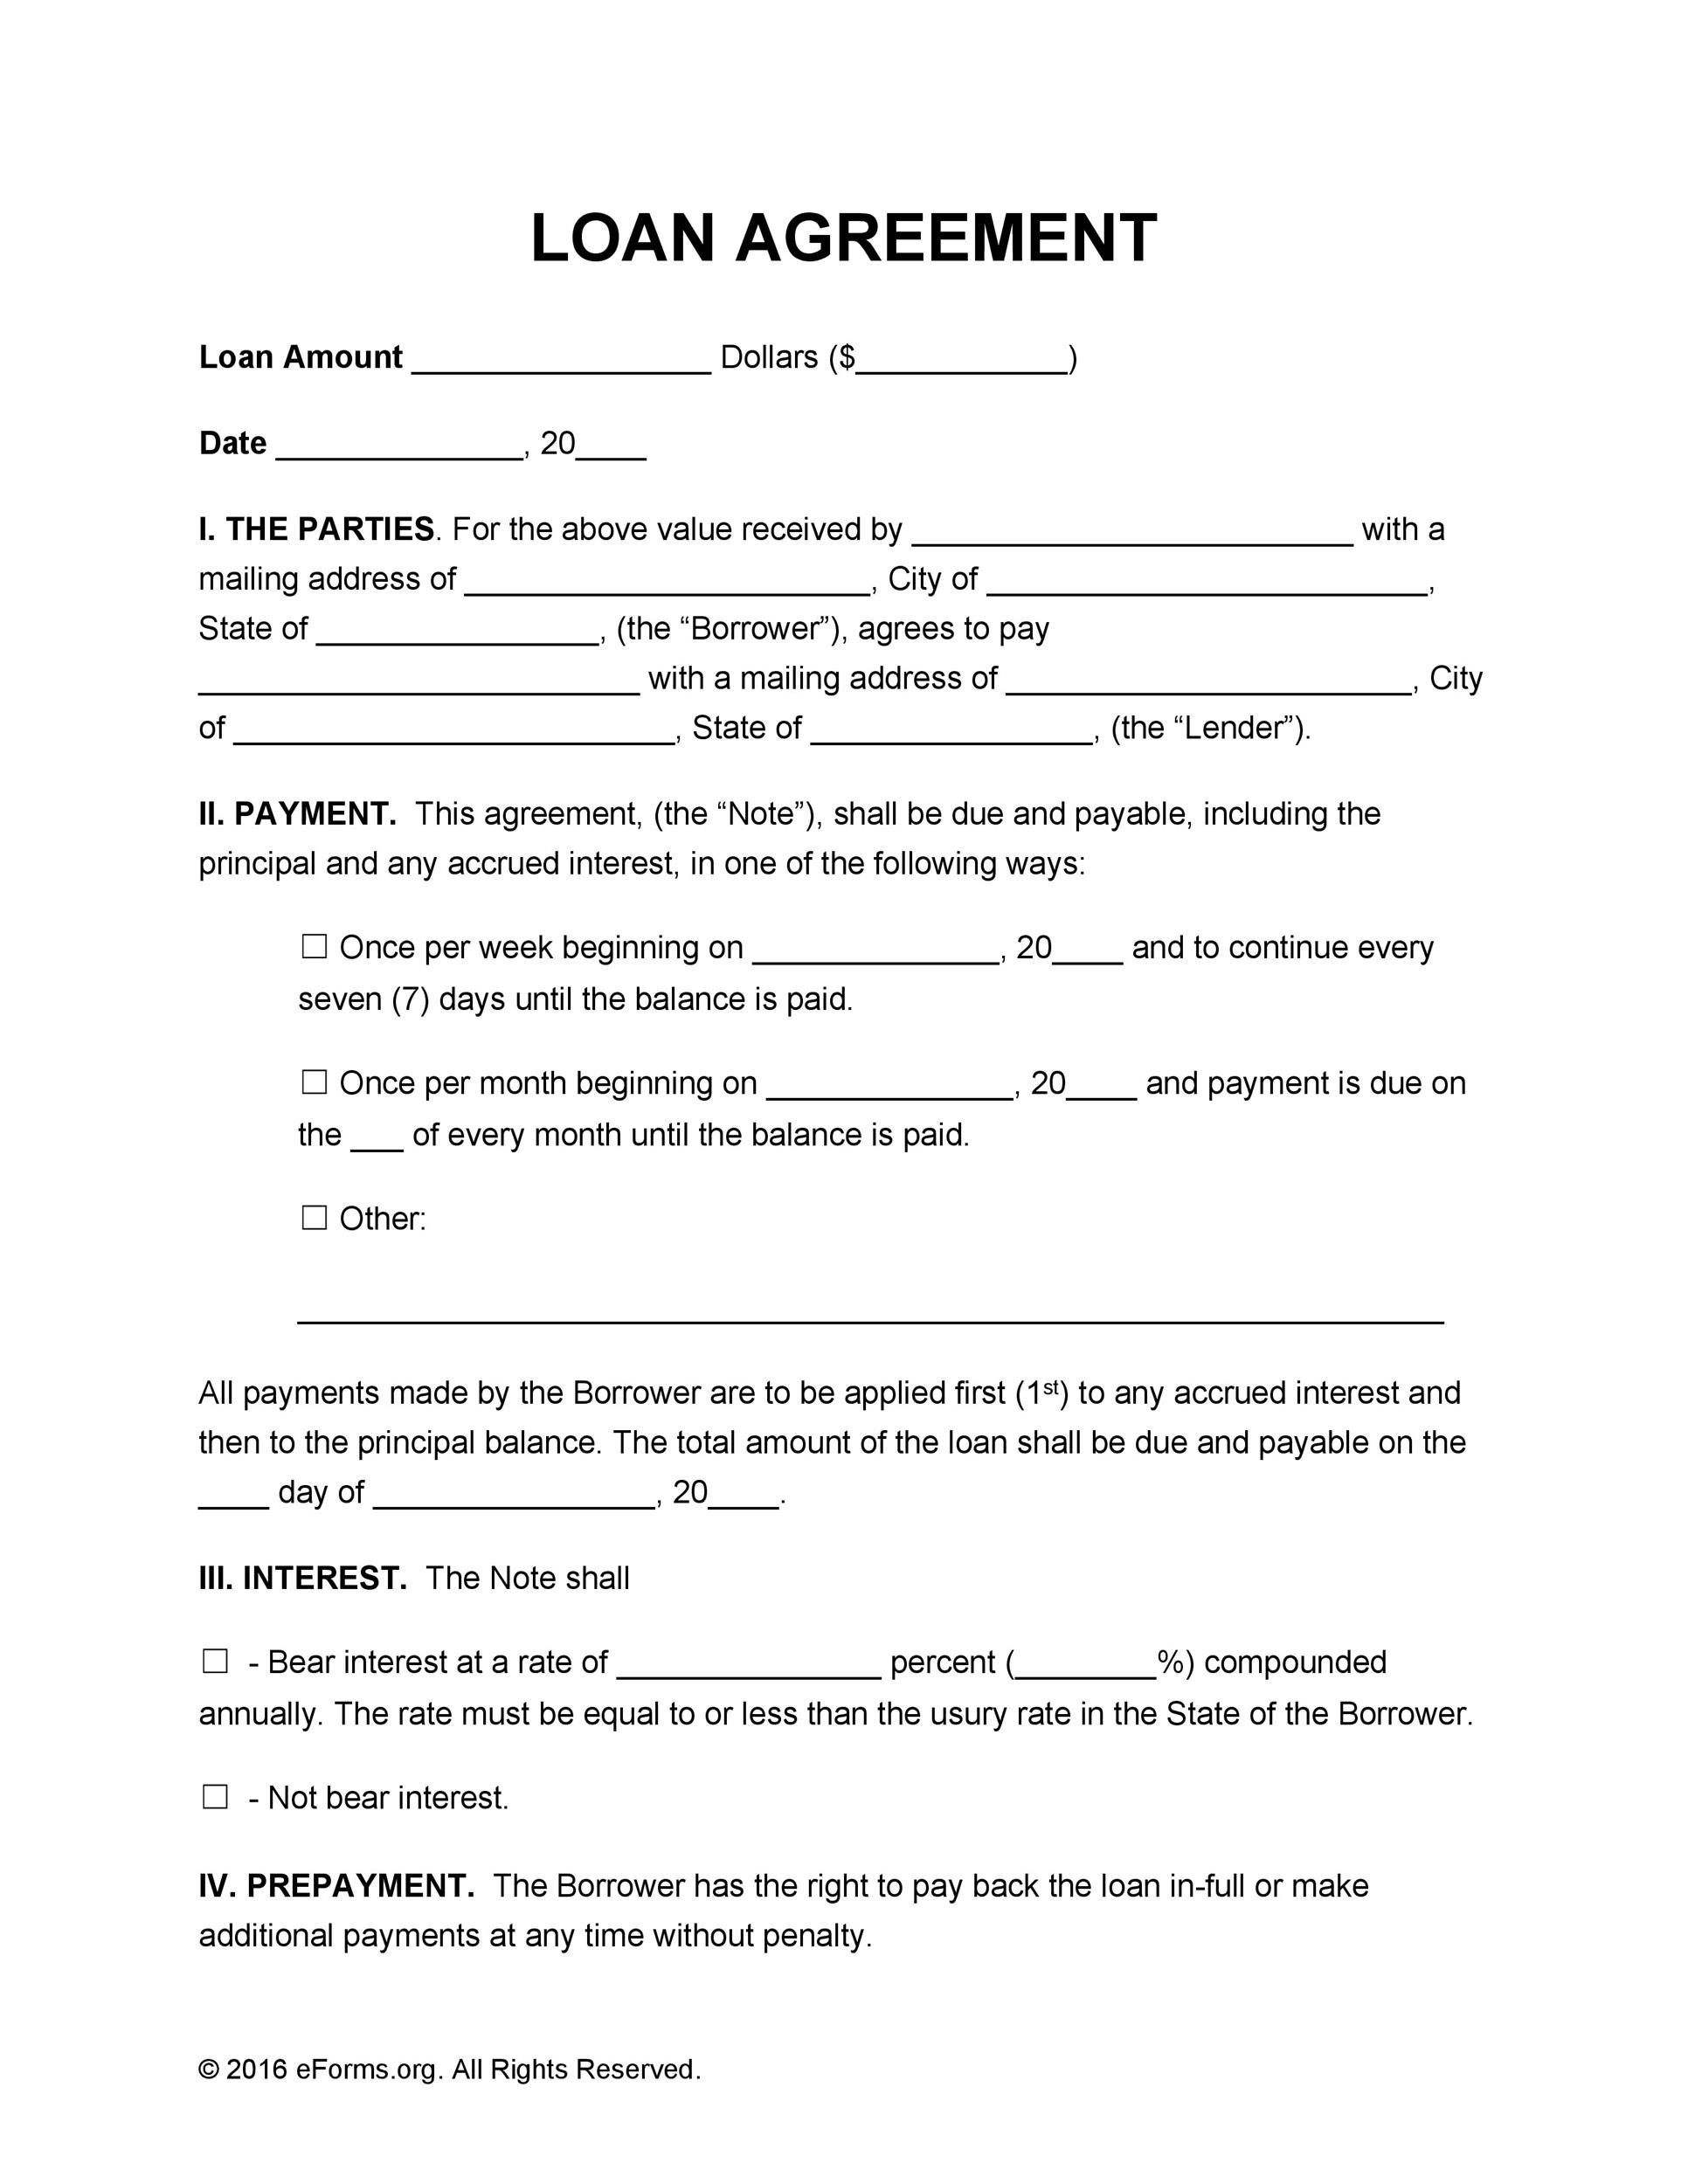 40+ Free Loan Agreement Templates Word & PDF ᐅ TemplateLab